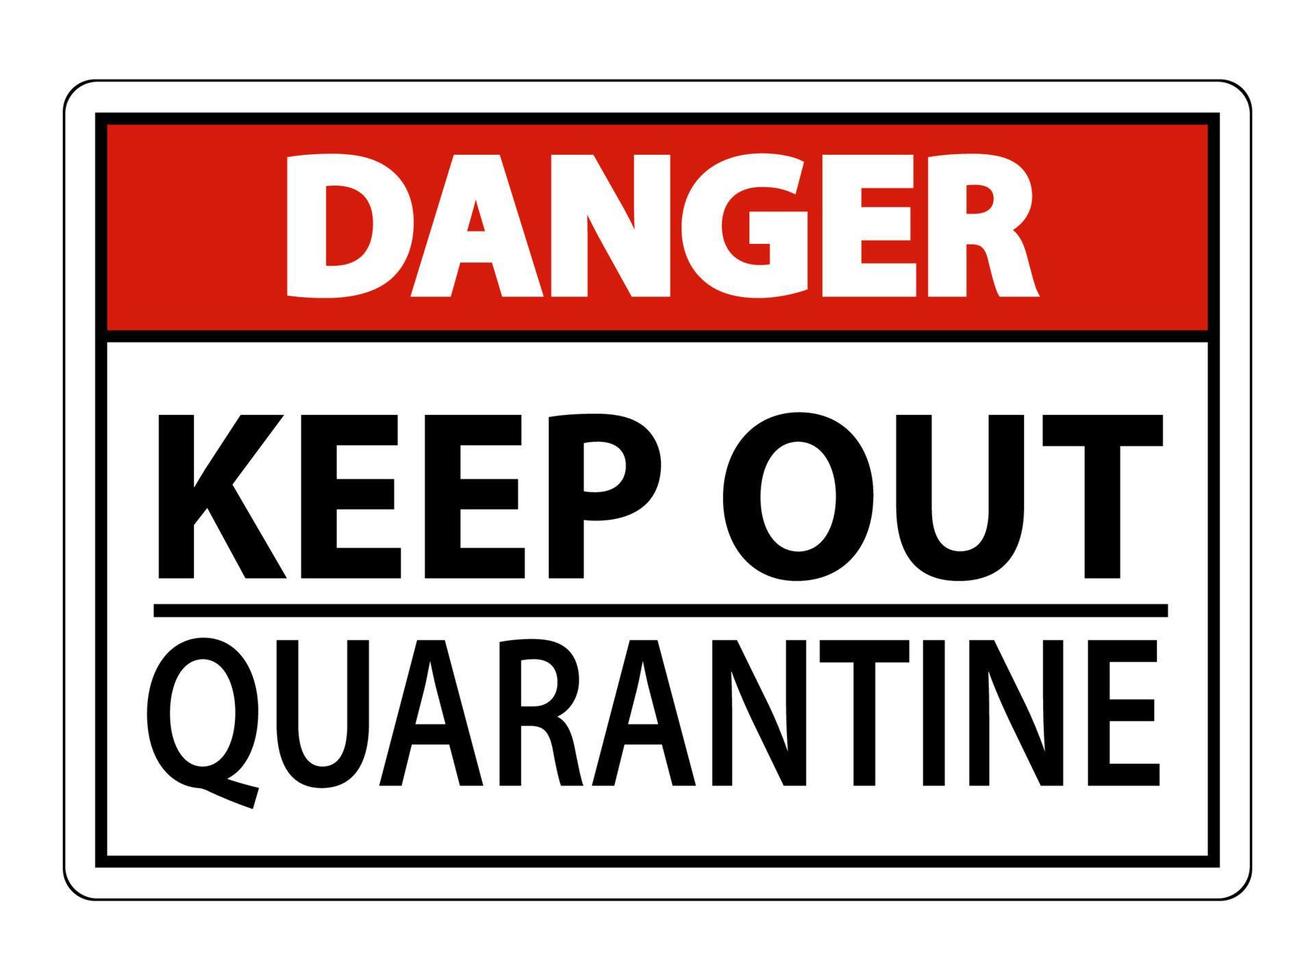 Danger garder hors signe de quarantaine isolé sur fond blanc, vector illustration eps.10